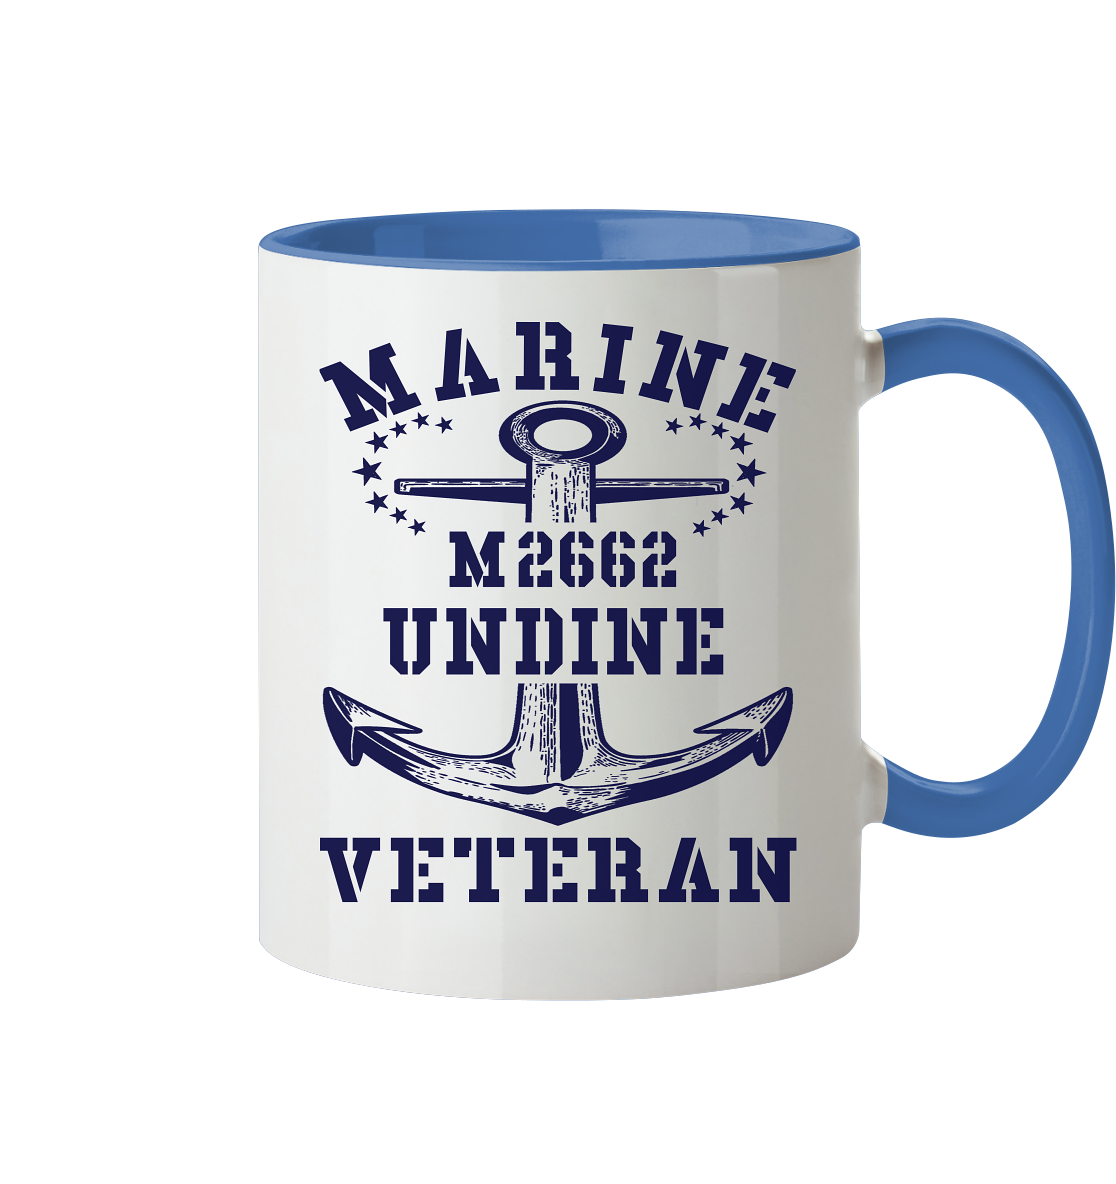 BiMi M2662 UNDINE Marine Veteran - Tasse zweifarbig